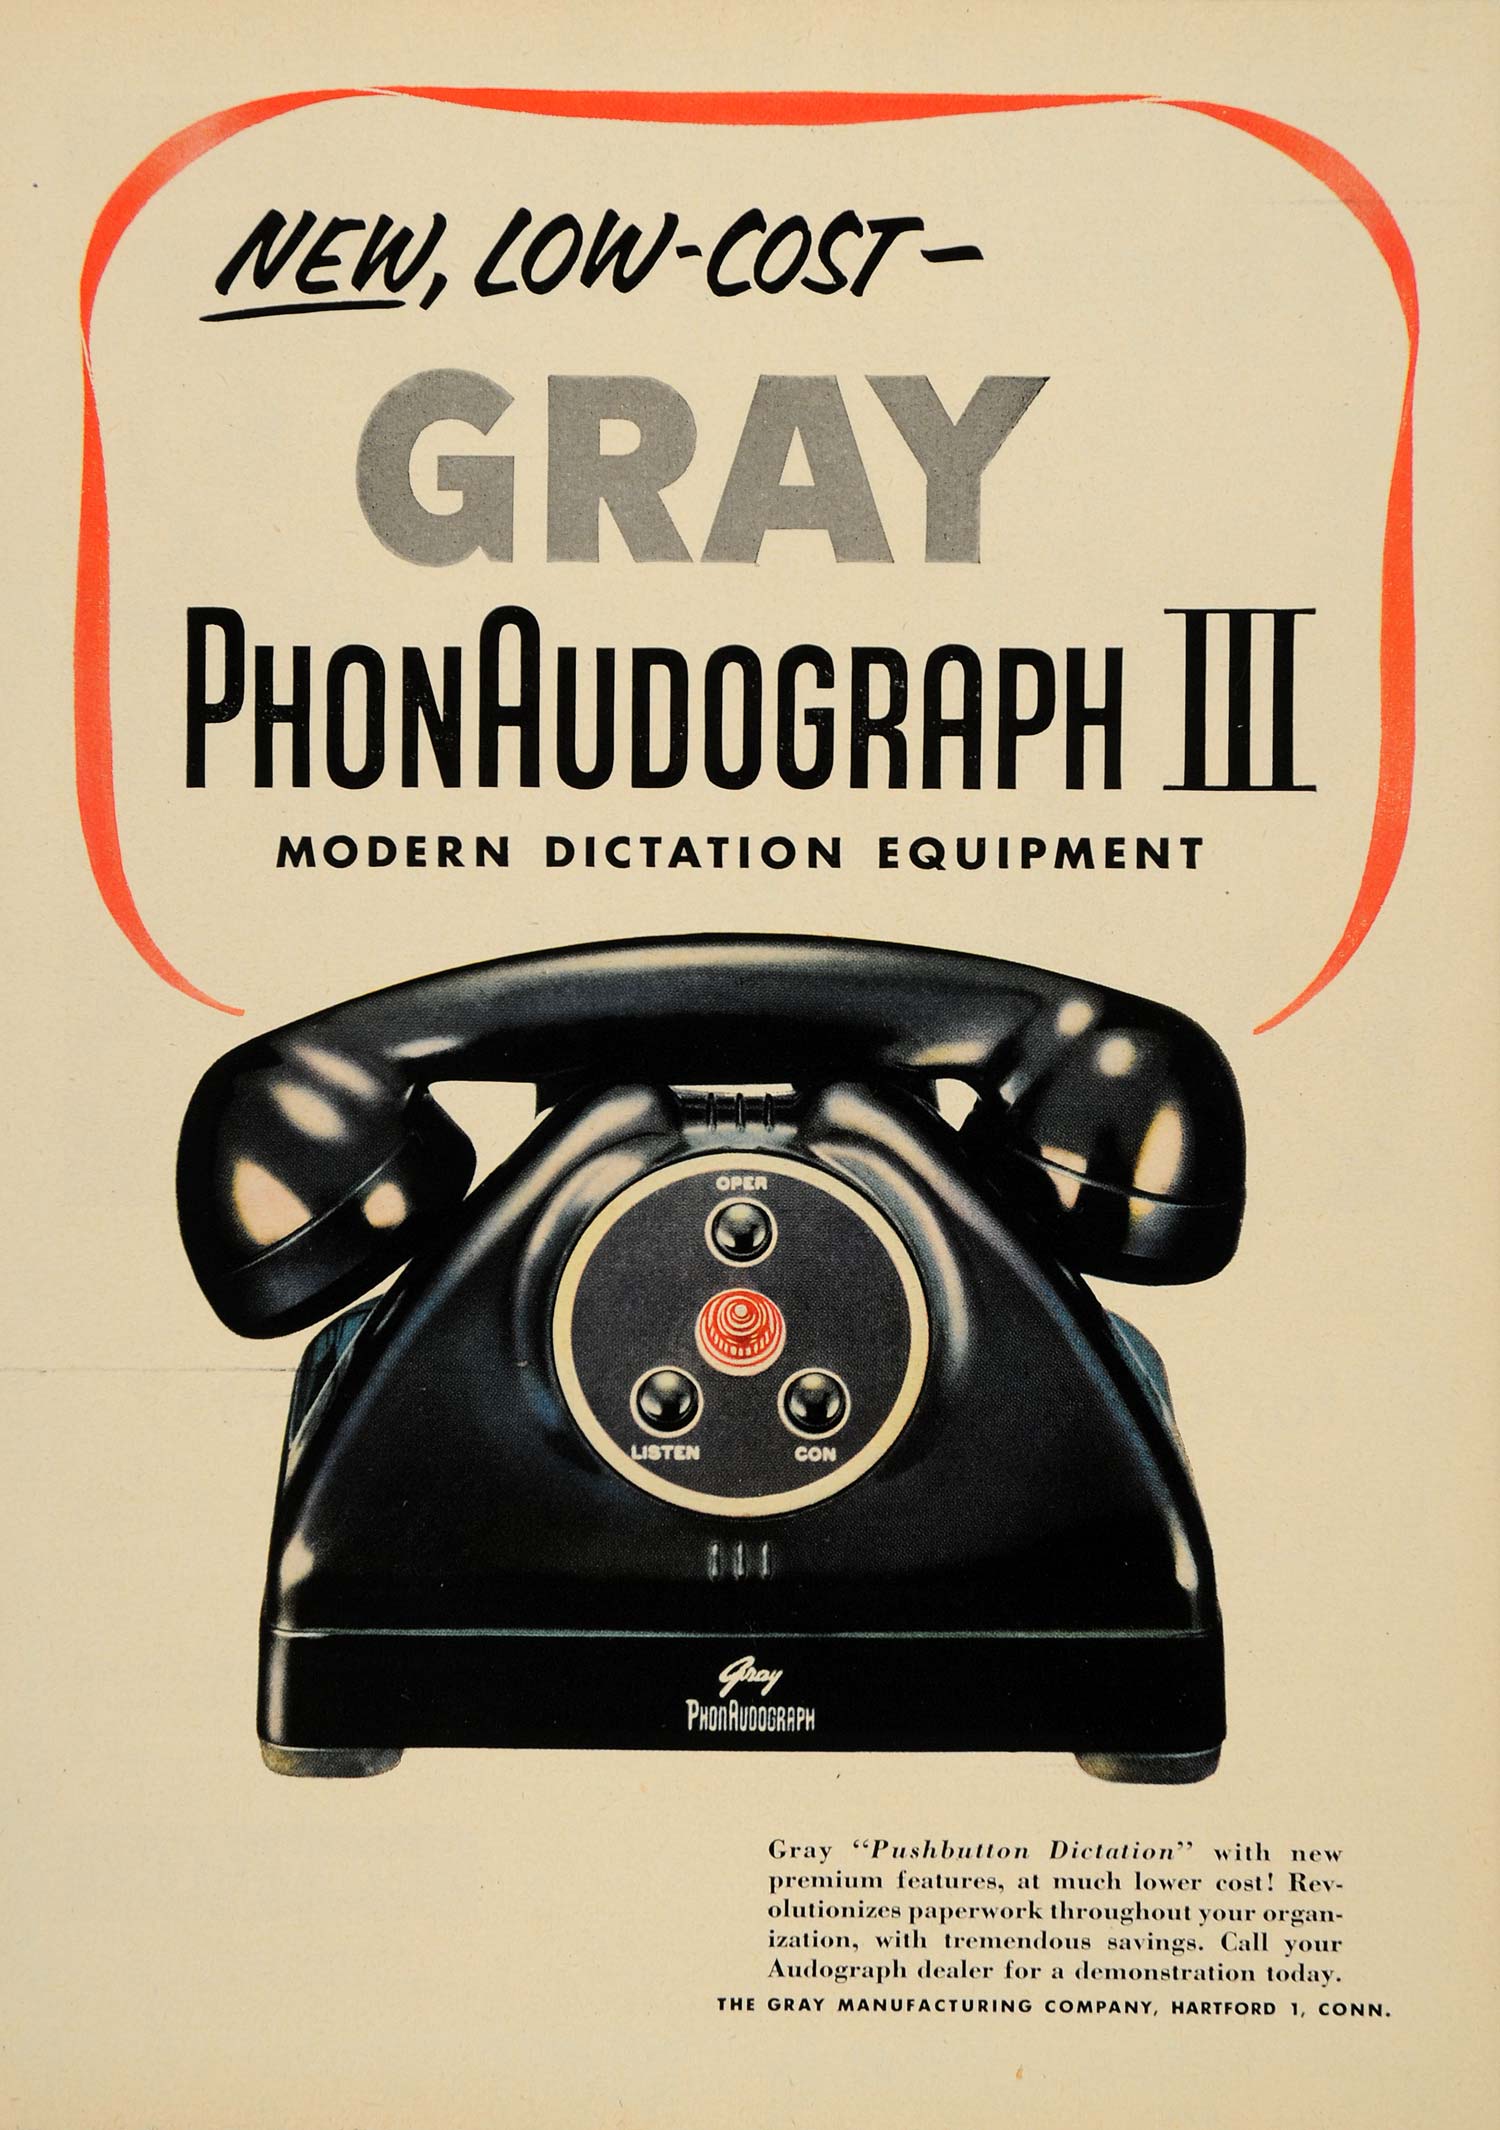 1954 Ad Gray PhonAudograph III Pushbutton Dictation - ORIGINAL ADVERTISING TM3